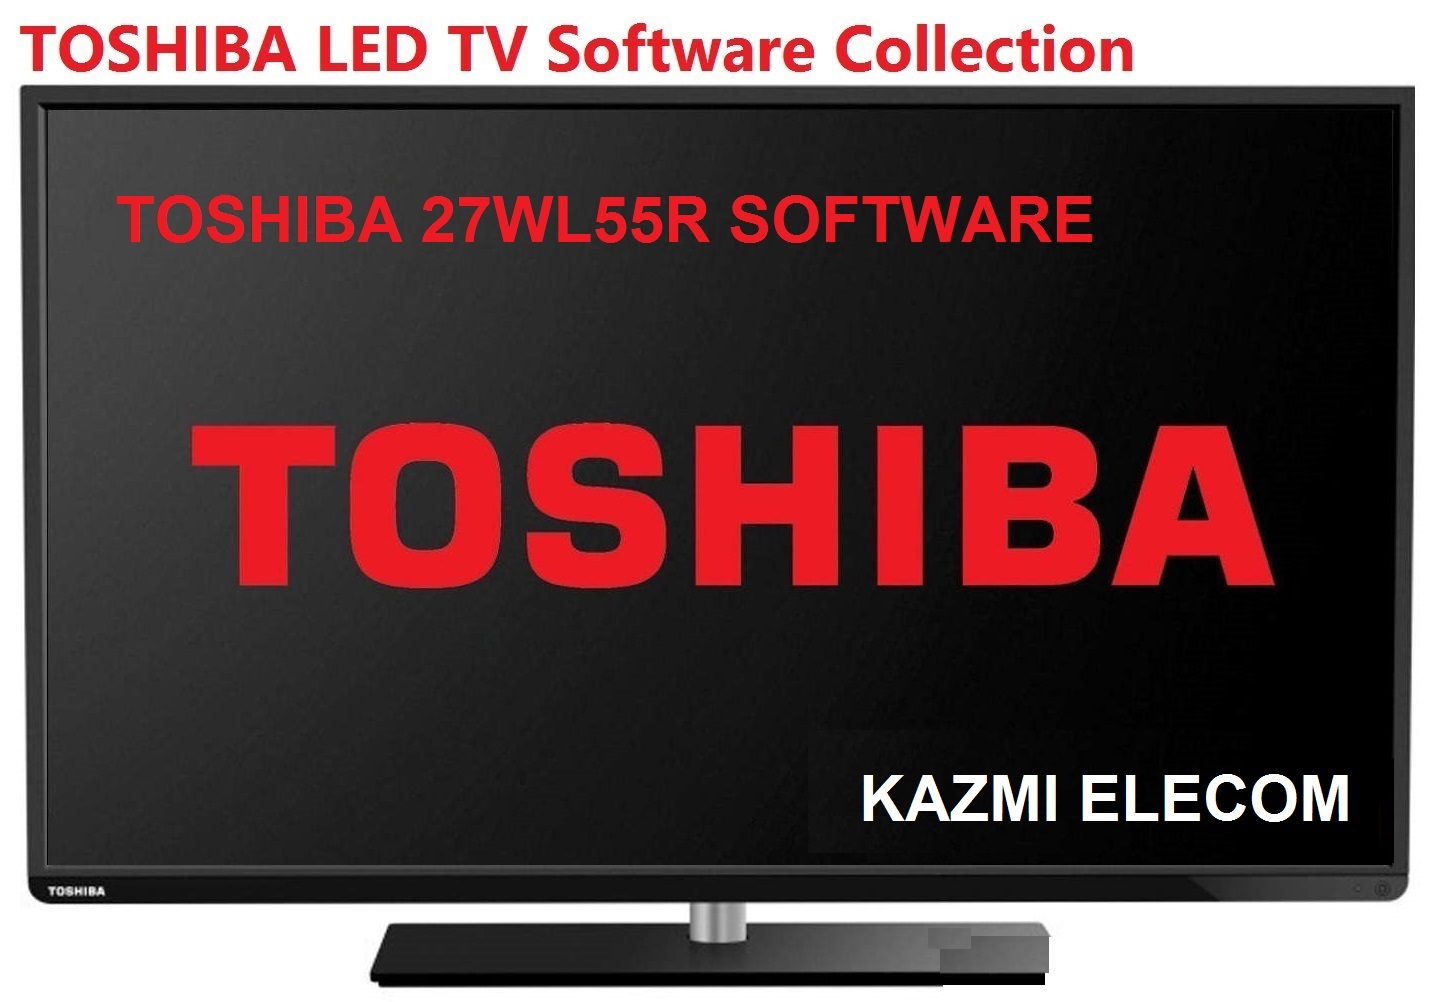 Toshiba 27Wl55R